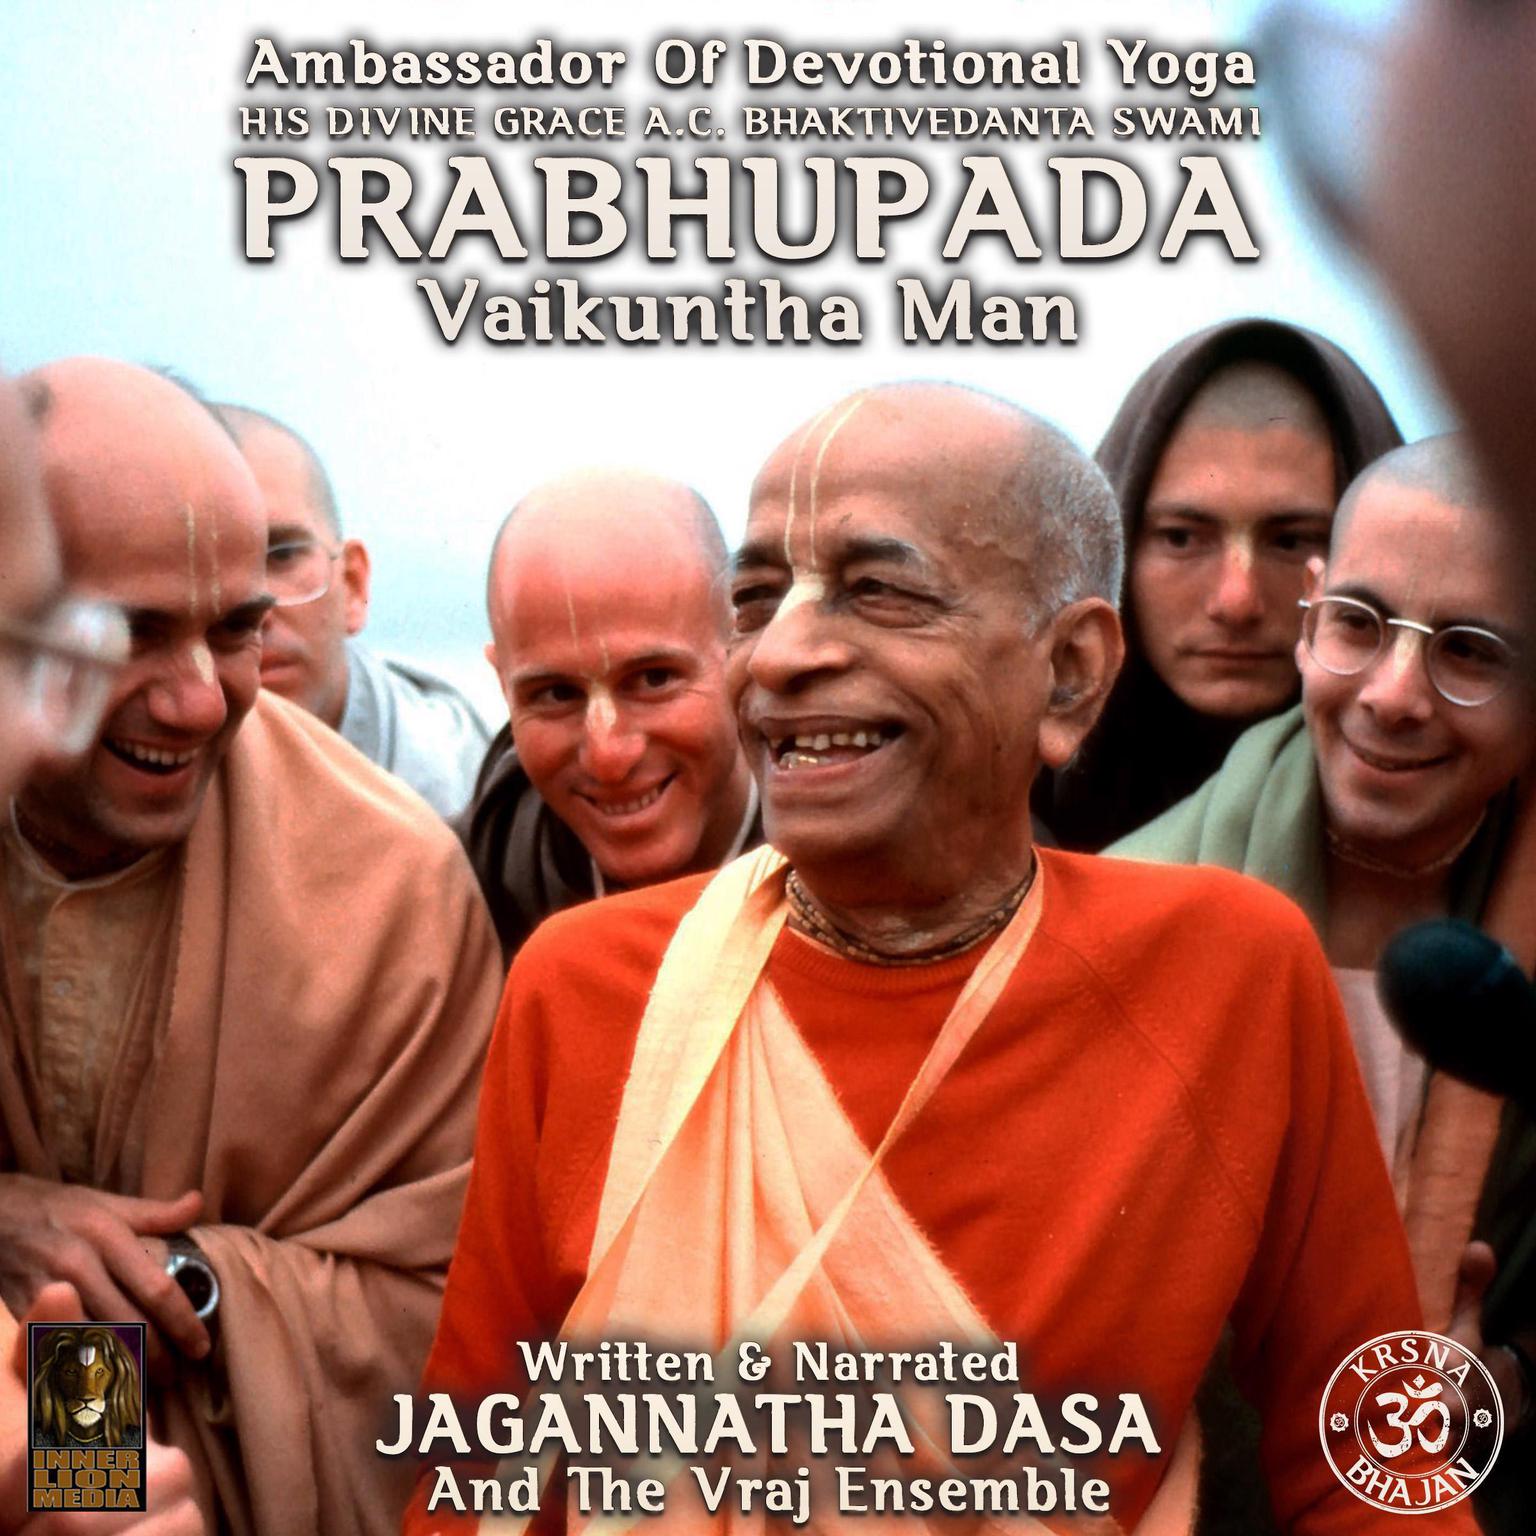 Ambassador Of Devotional Yoga His Divine Grace A.C. Bhaktivedanta Swami Prabhupada Vaikuntha Man Audiobook, by Jagannatha Dasa